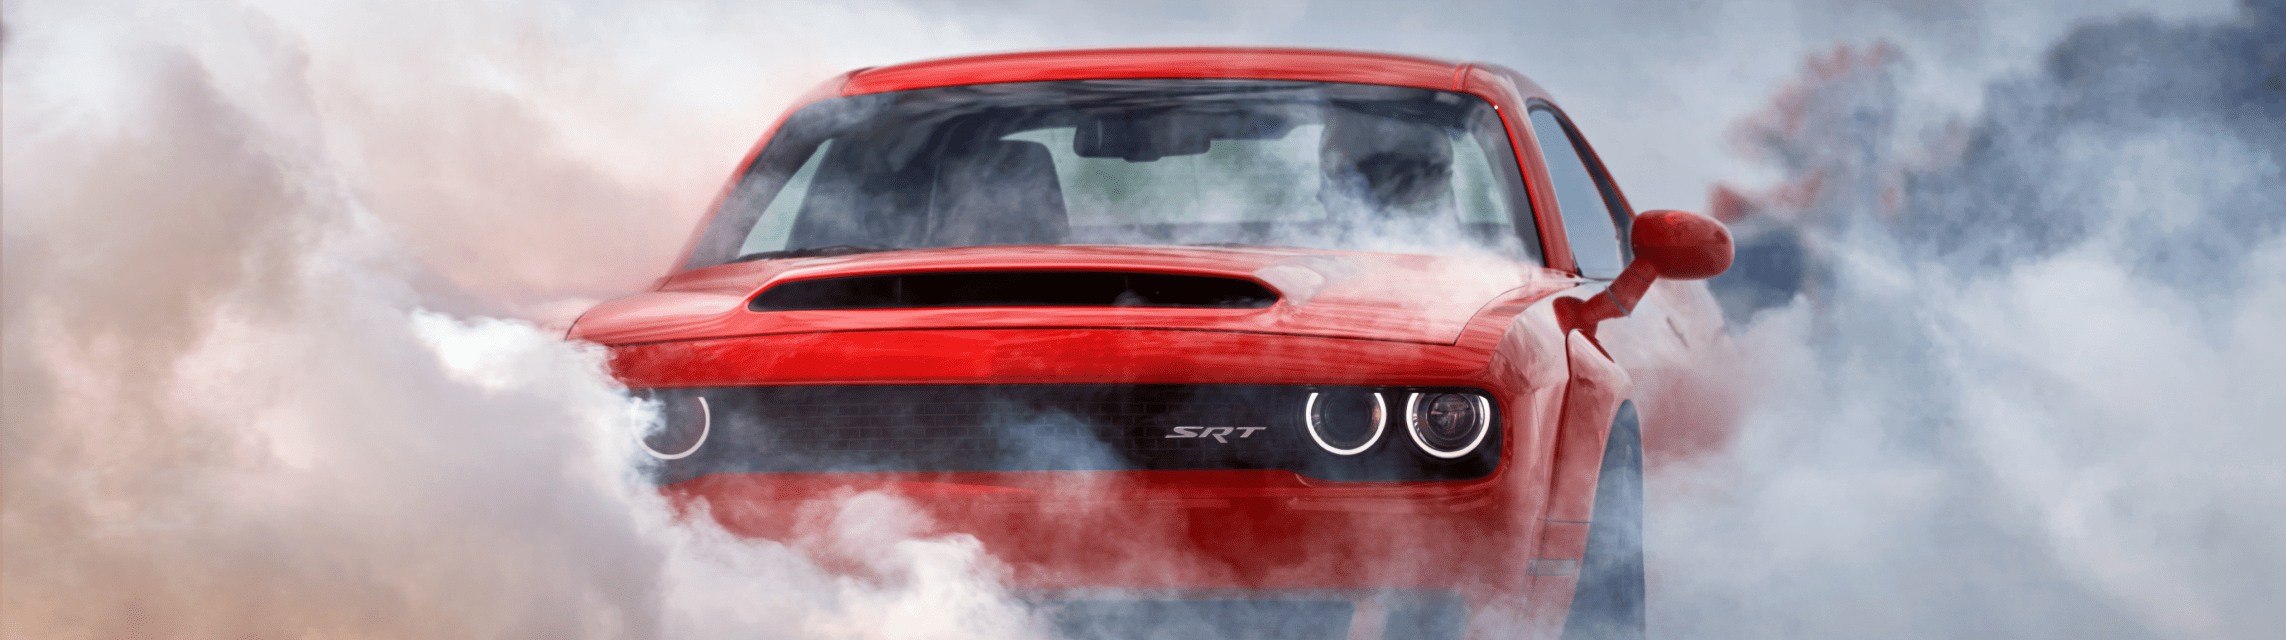 Red Dodge Challenger SRT smoking its tires